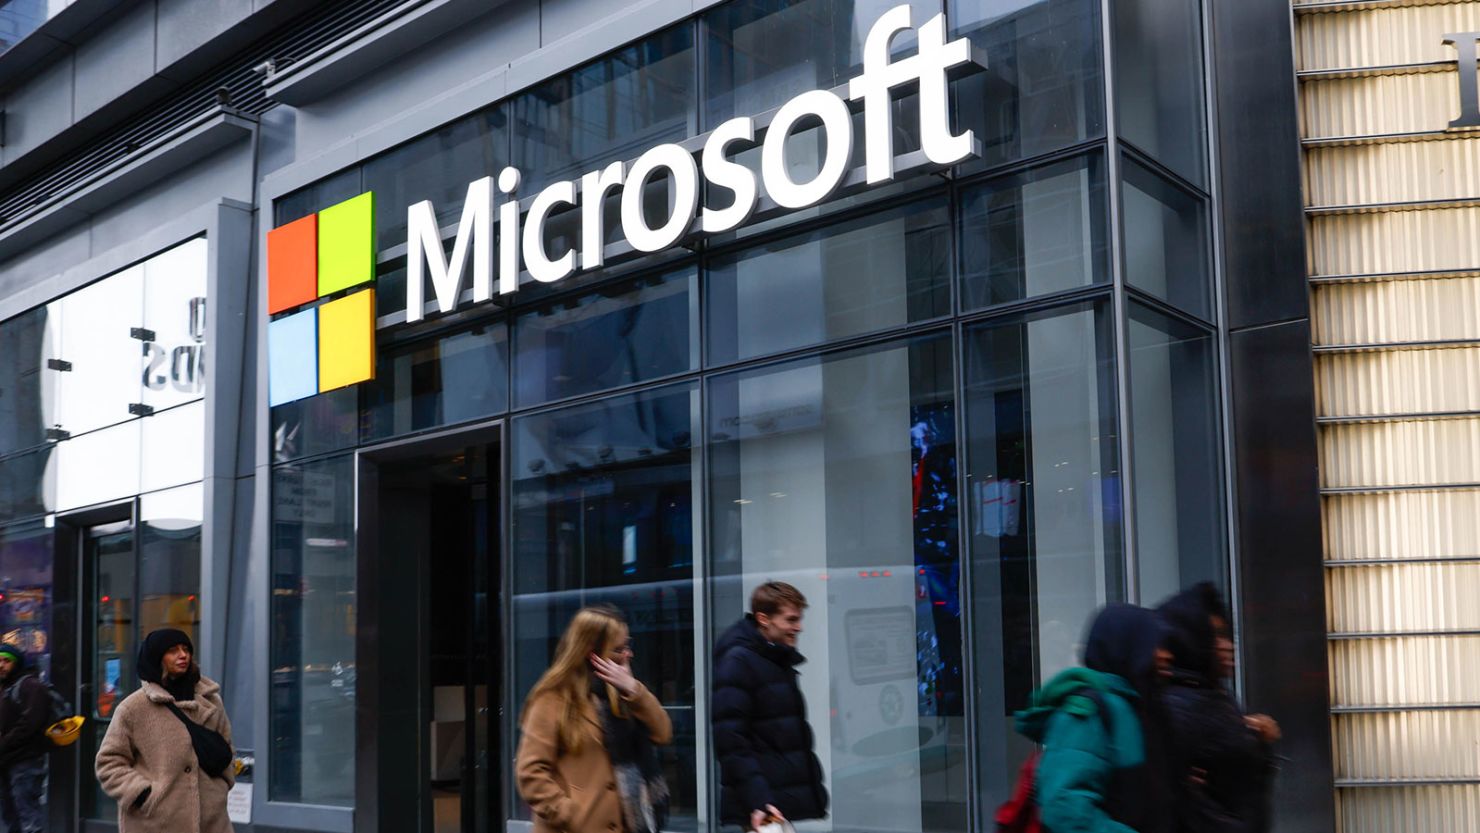 Microsoft's building in Times Square in New York City